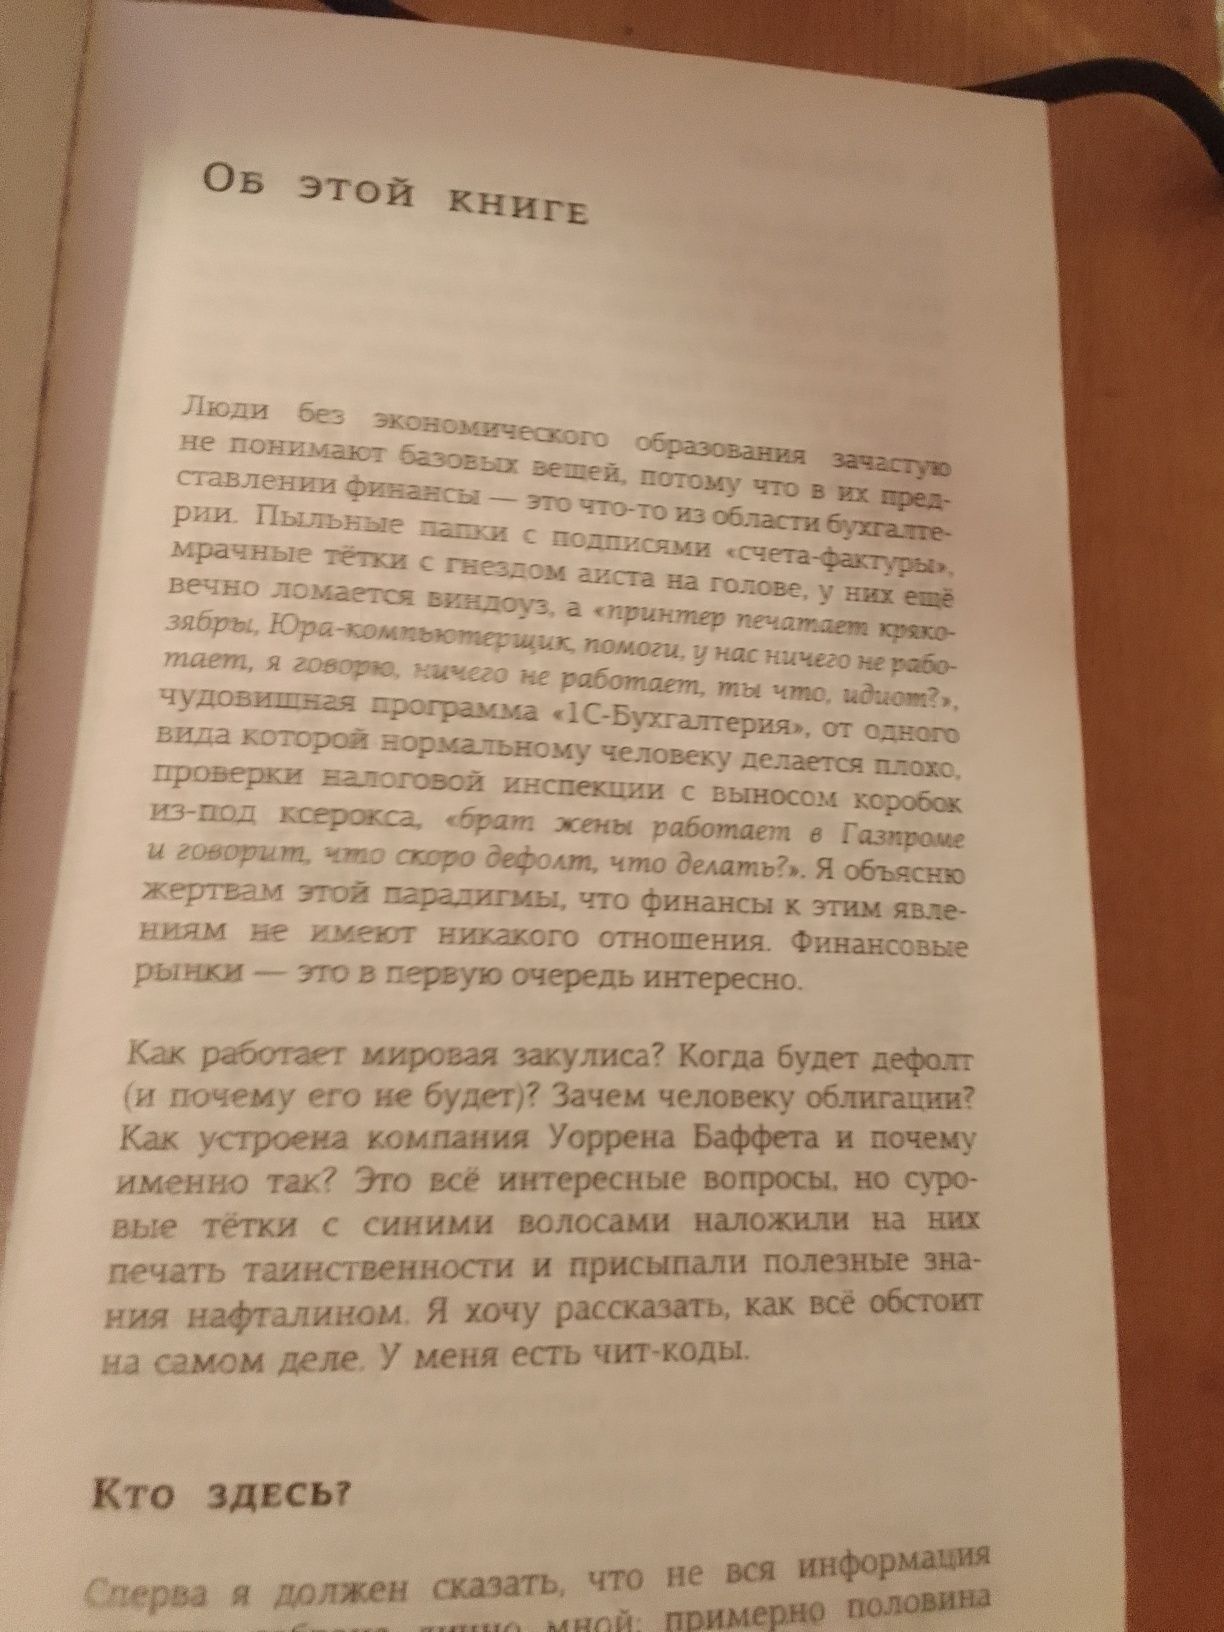 Книга про экономику,хулиномика, Алексей Марков